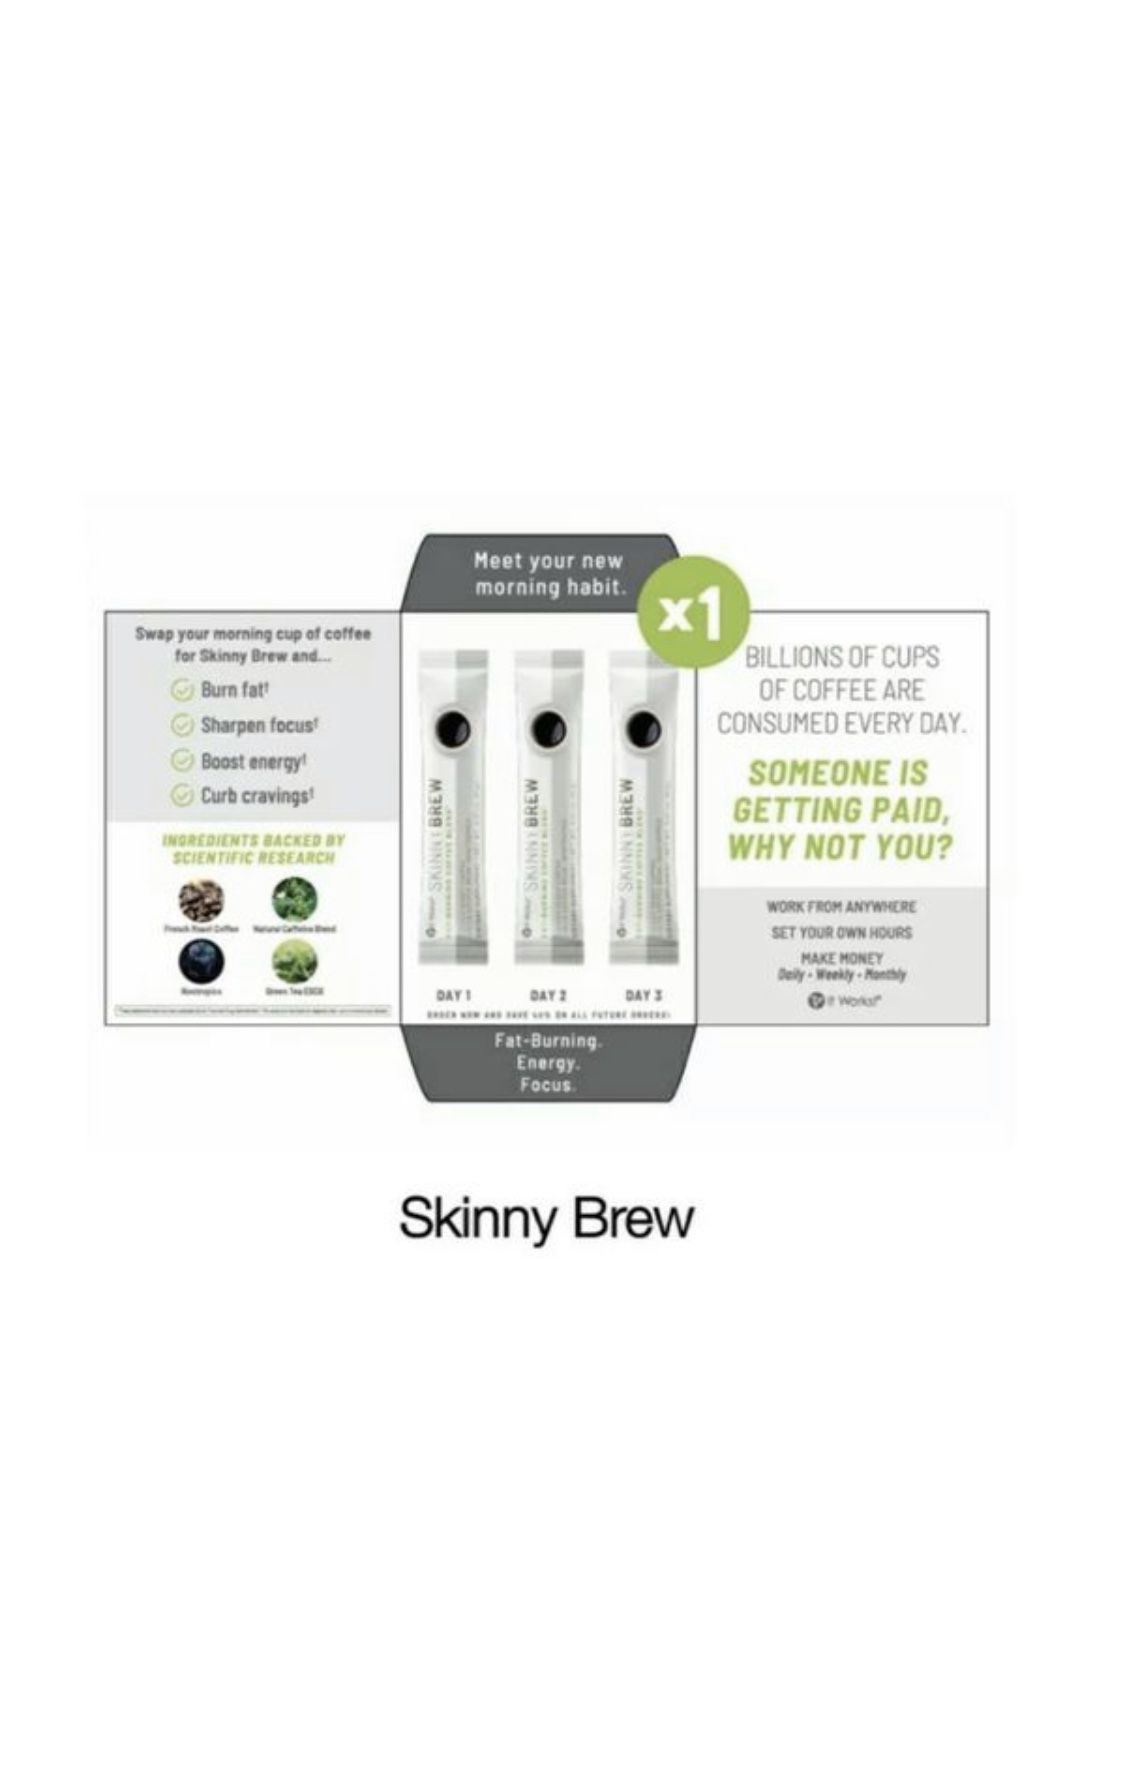 ItWorks! Skinny Brew Coffee Samples